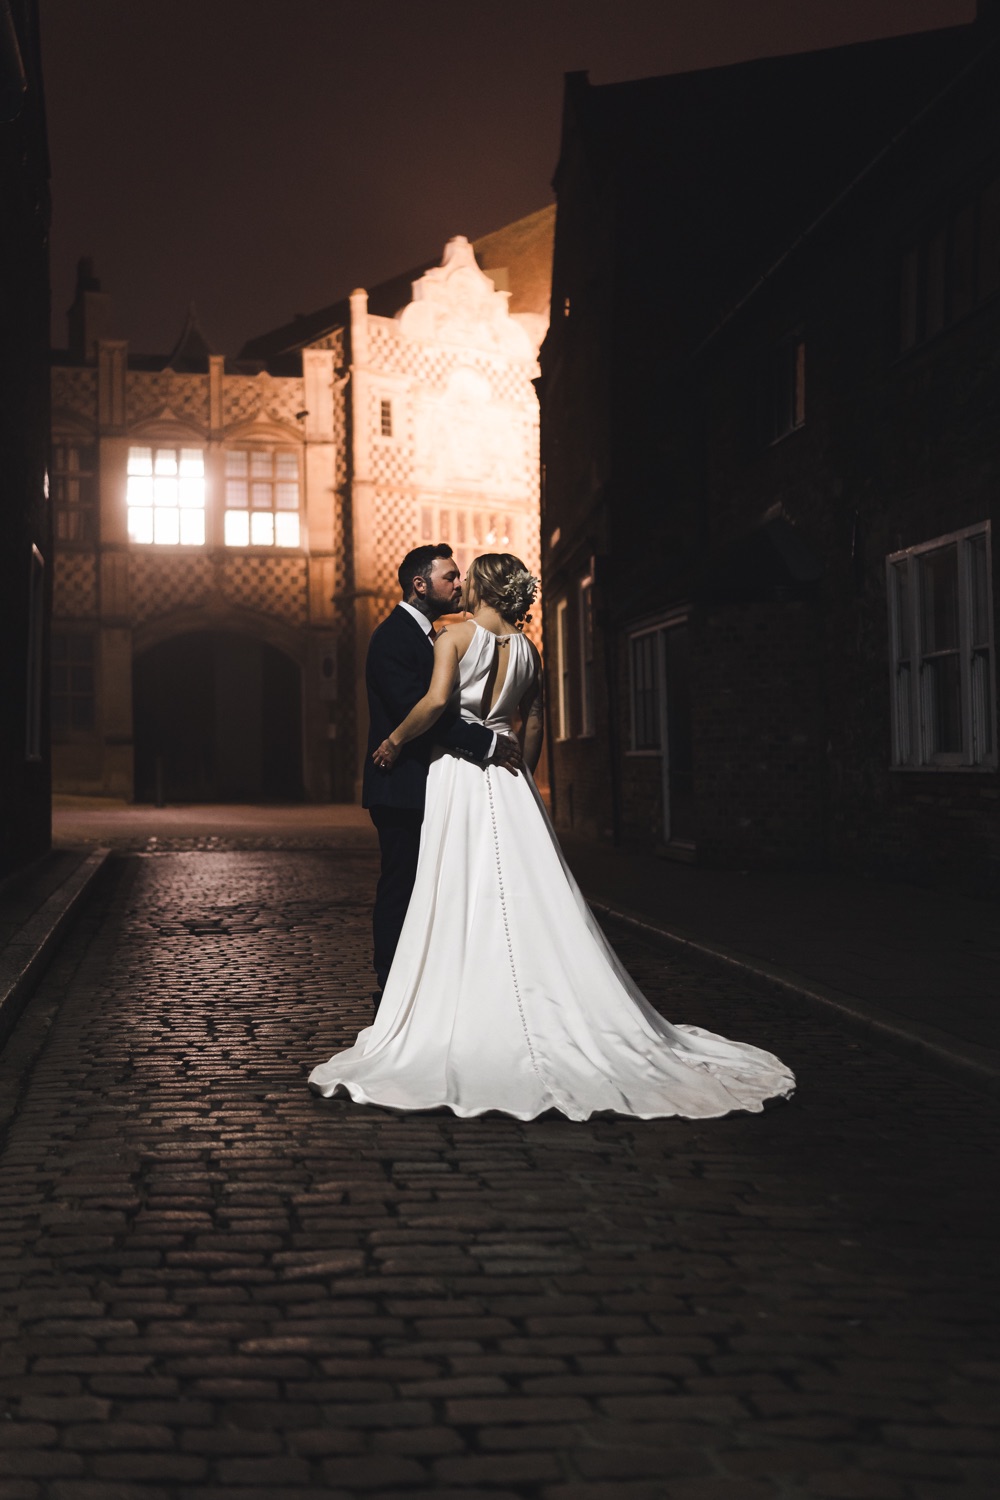 King's Lynn wedding photographer | Ben Chapman Photos | Norfolk wedding photographer | King's Lynn Town Hall wedding photos